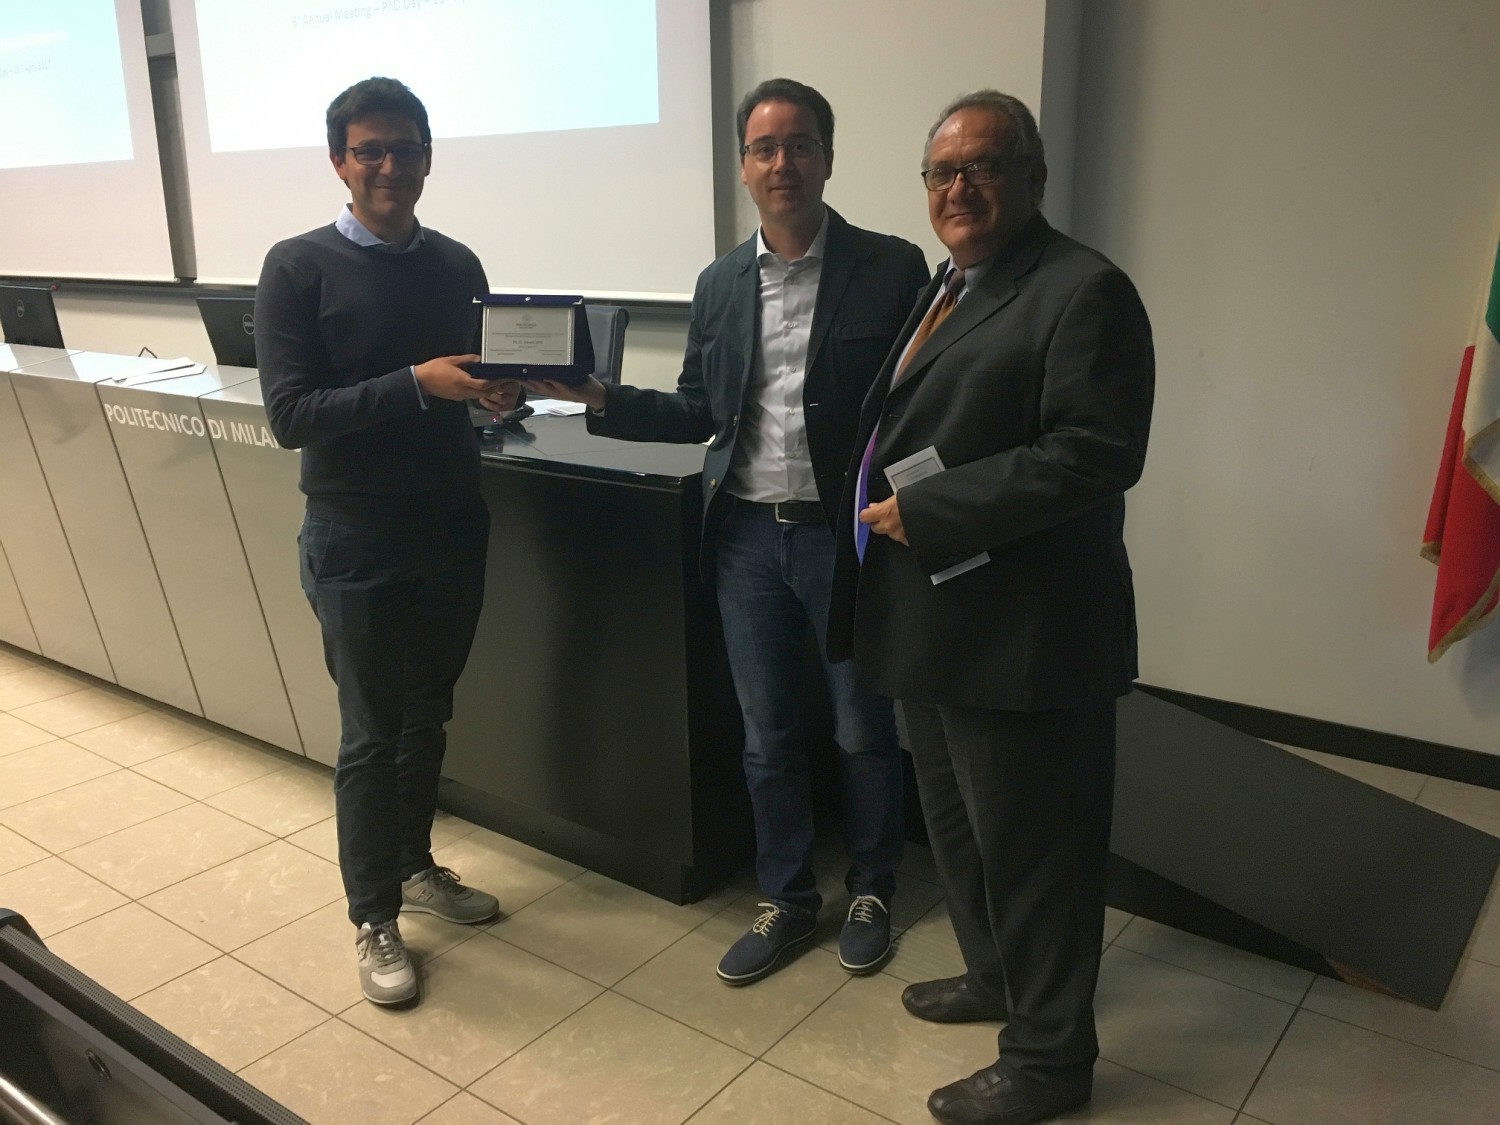 PhD Award to Ing. Gabriele Lodi